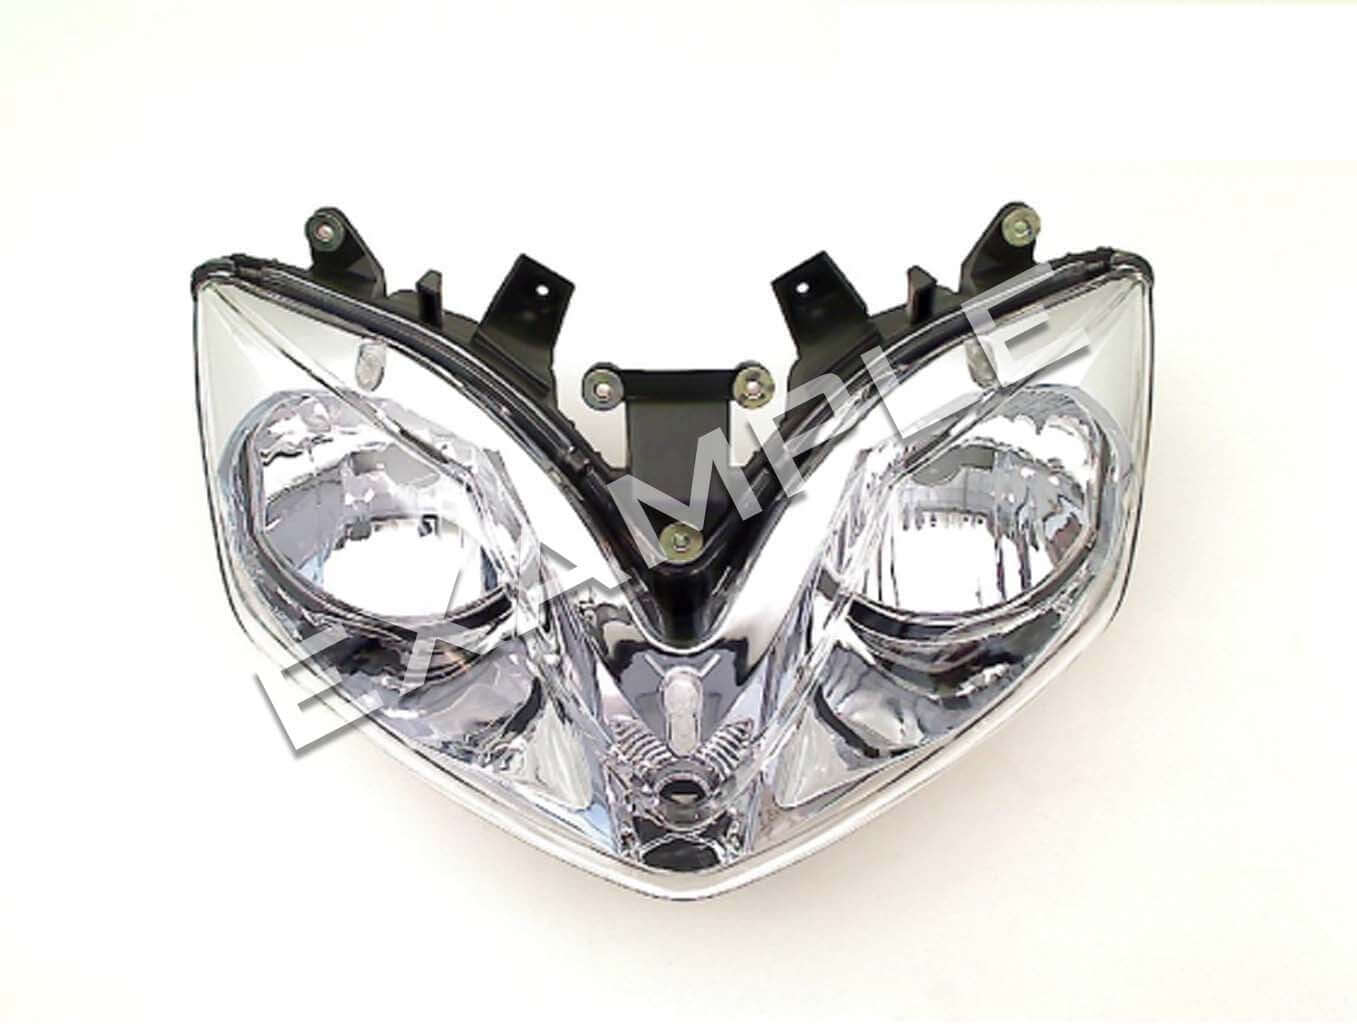 Honda CBR 600 FS headlight upgrade kit HID bi-xenon headlight upgrade kit